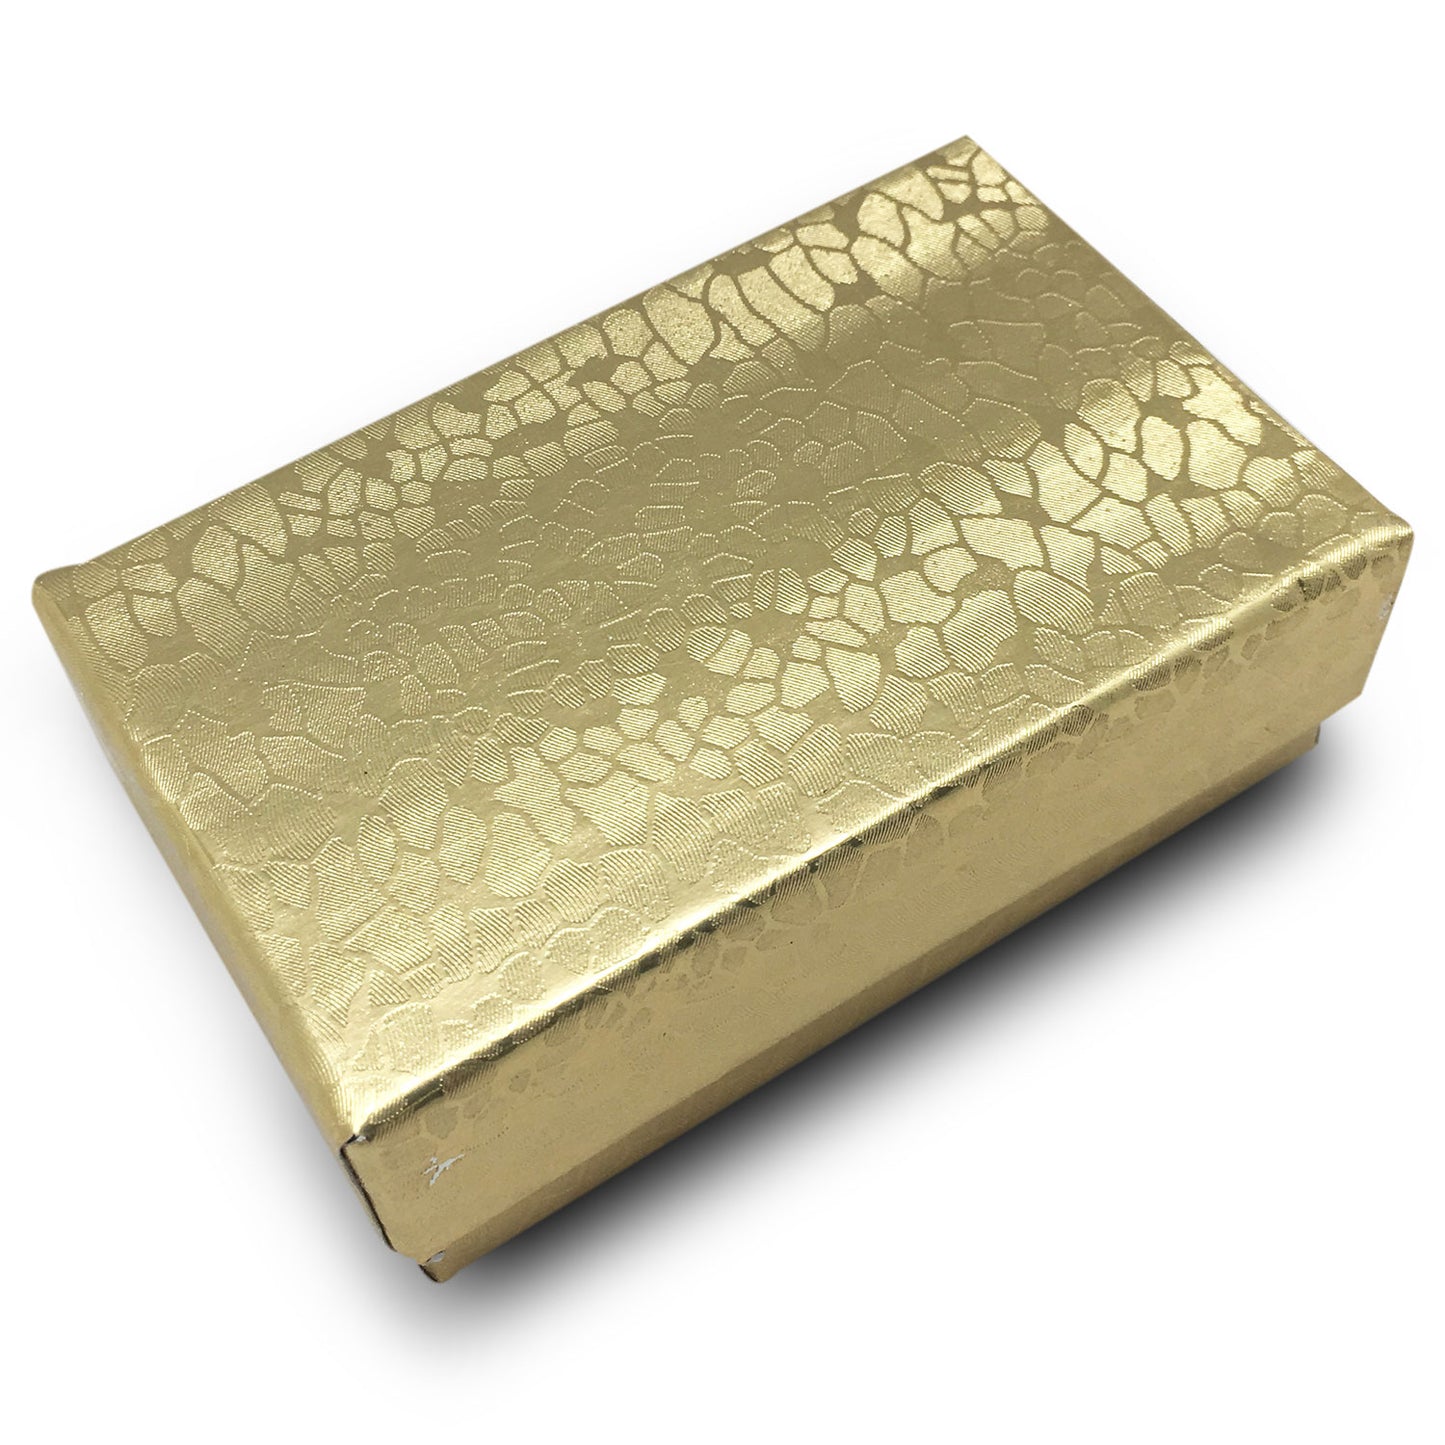 2 5/8"Wx 1 1/2"D x 1" H Gold Cotton filled paper box